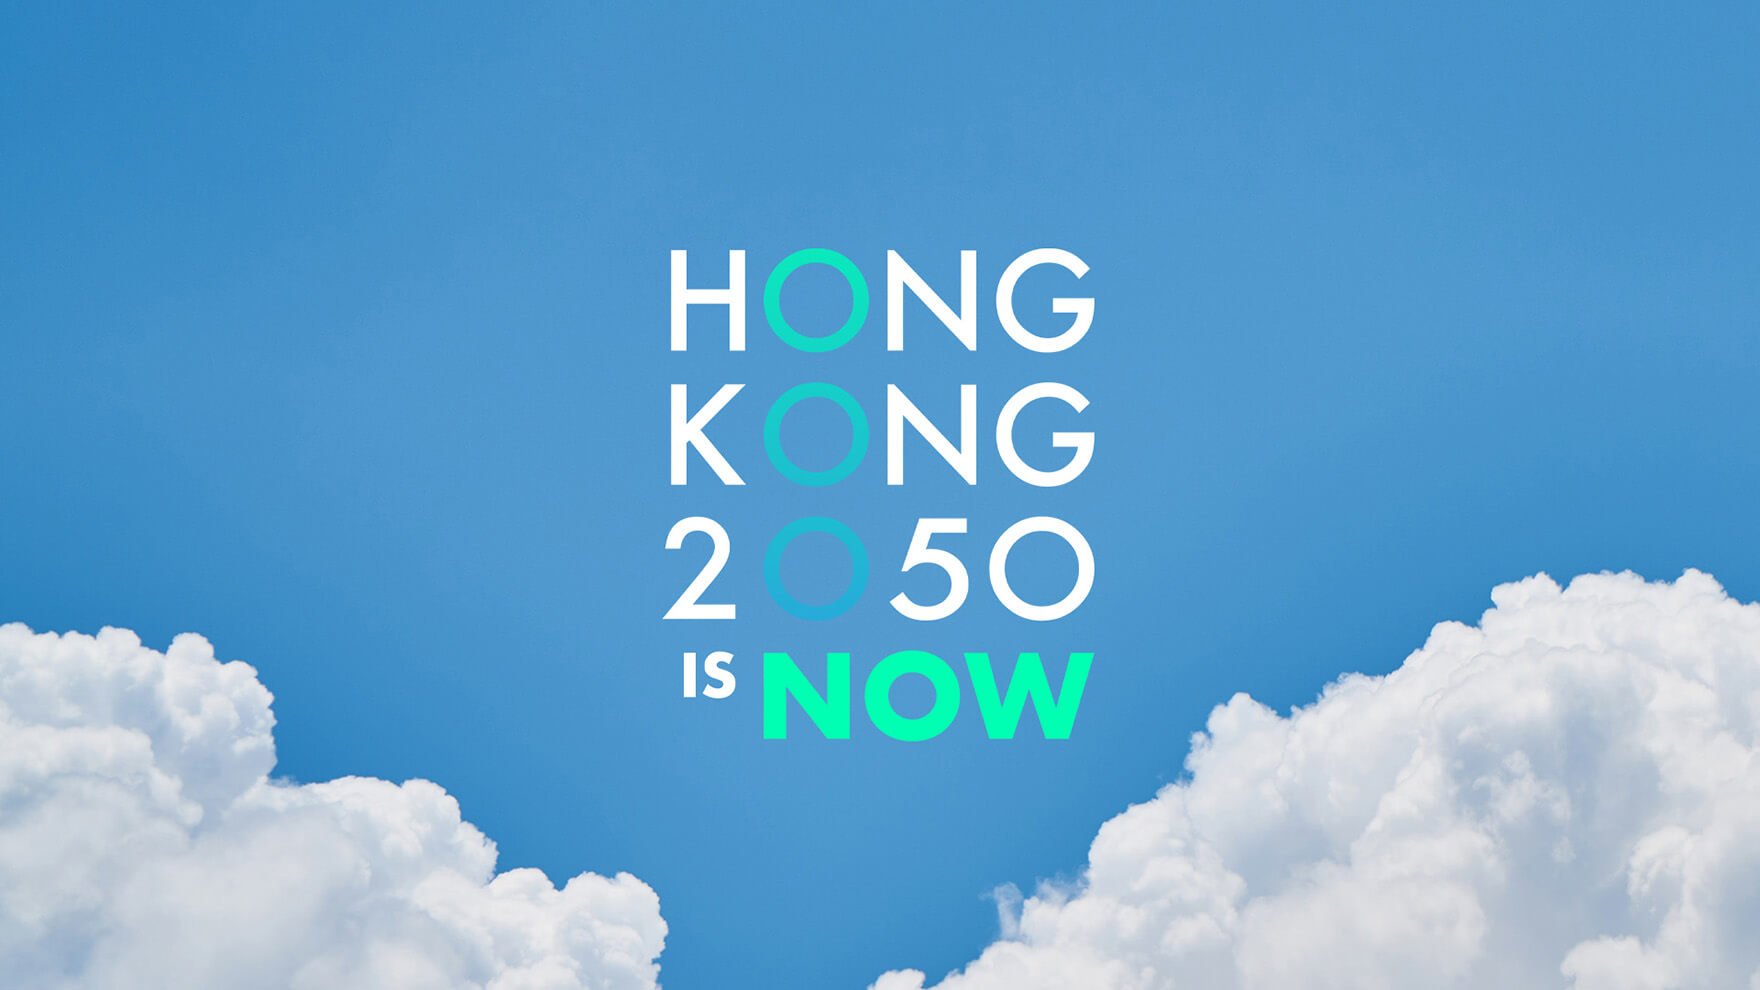 Branding Agency Hong Kong_HK2050isNOW_NGO Branding_CheddarMedia_01_1760